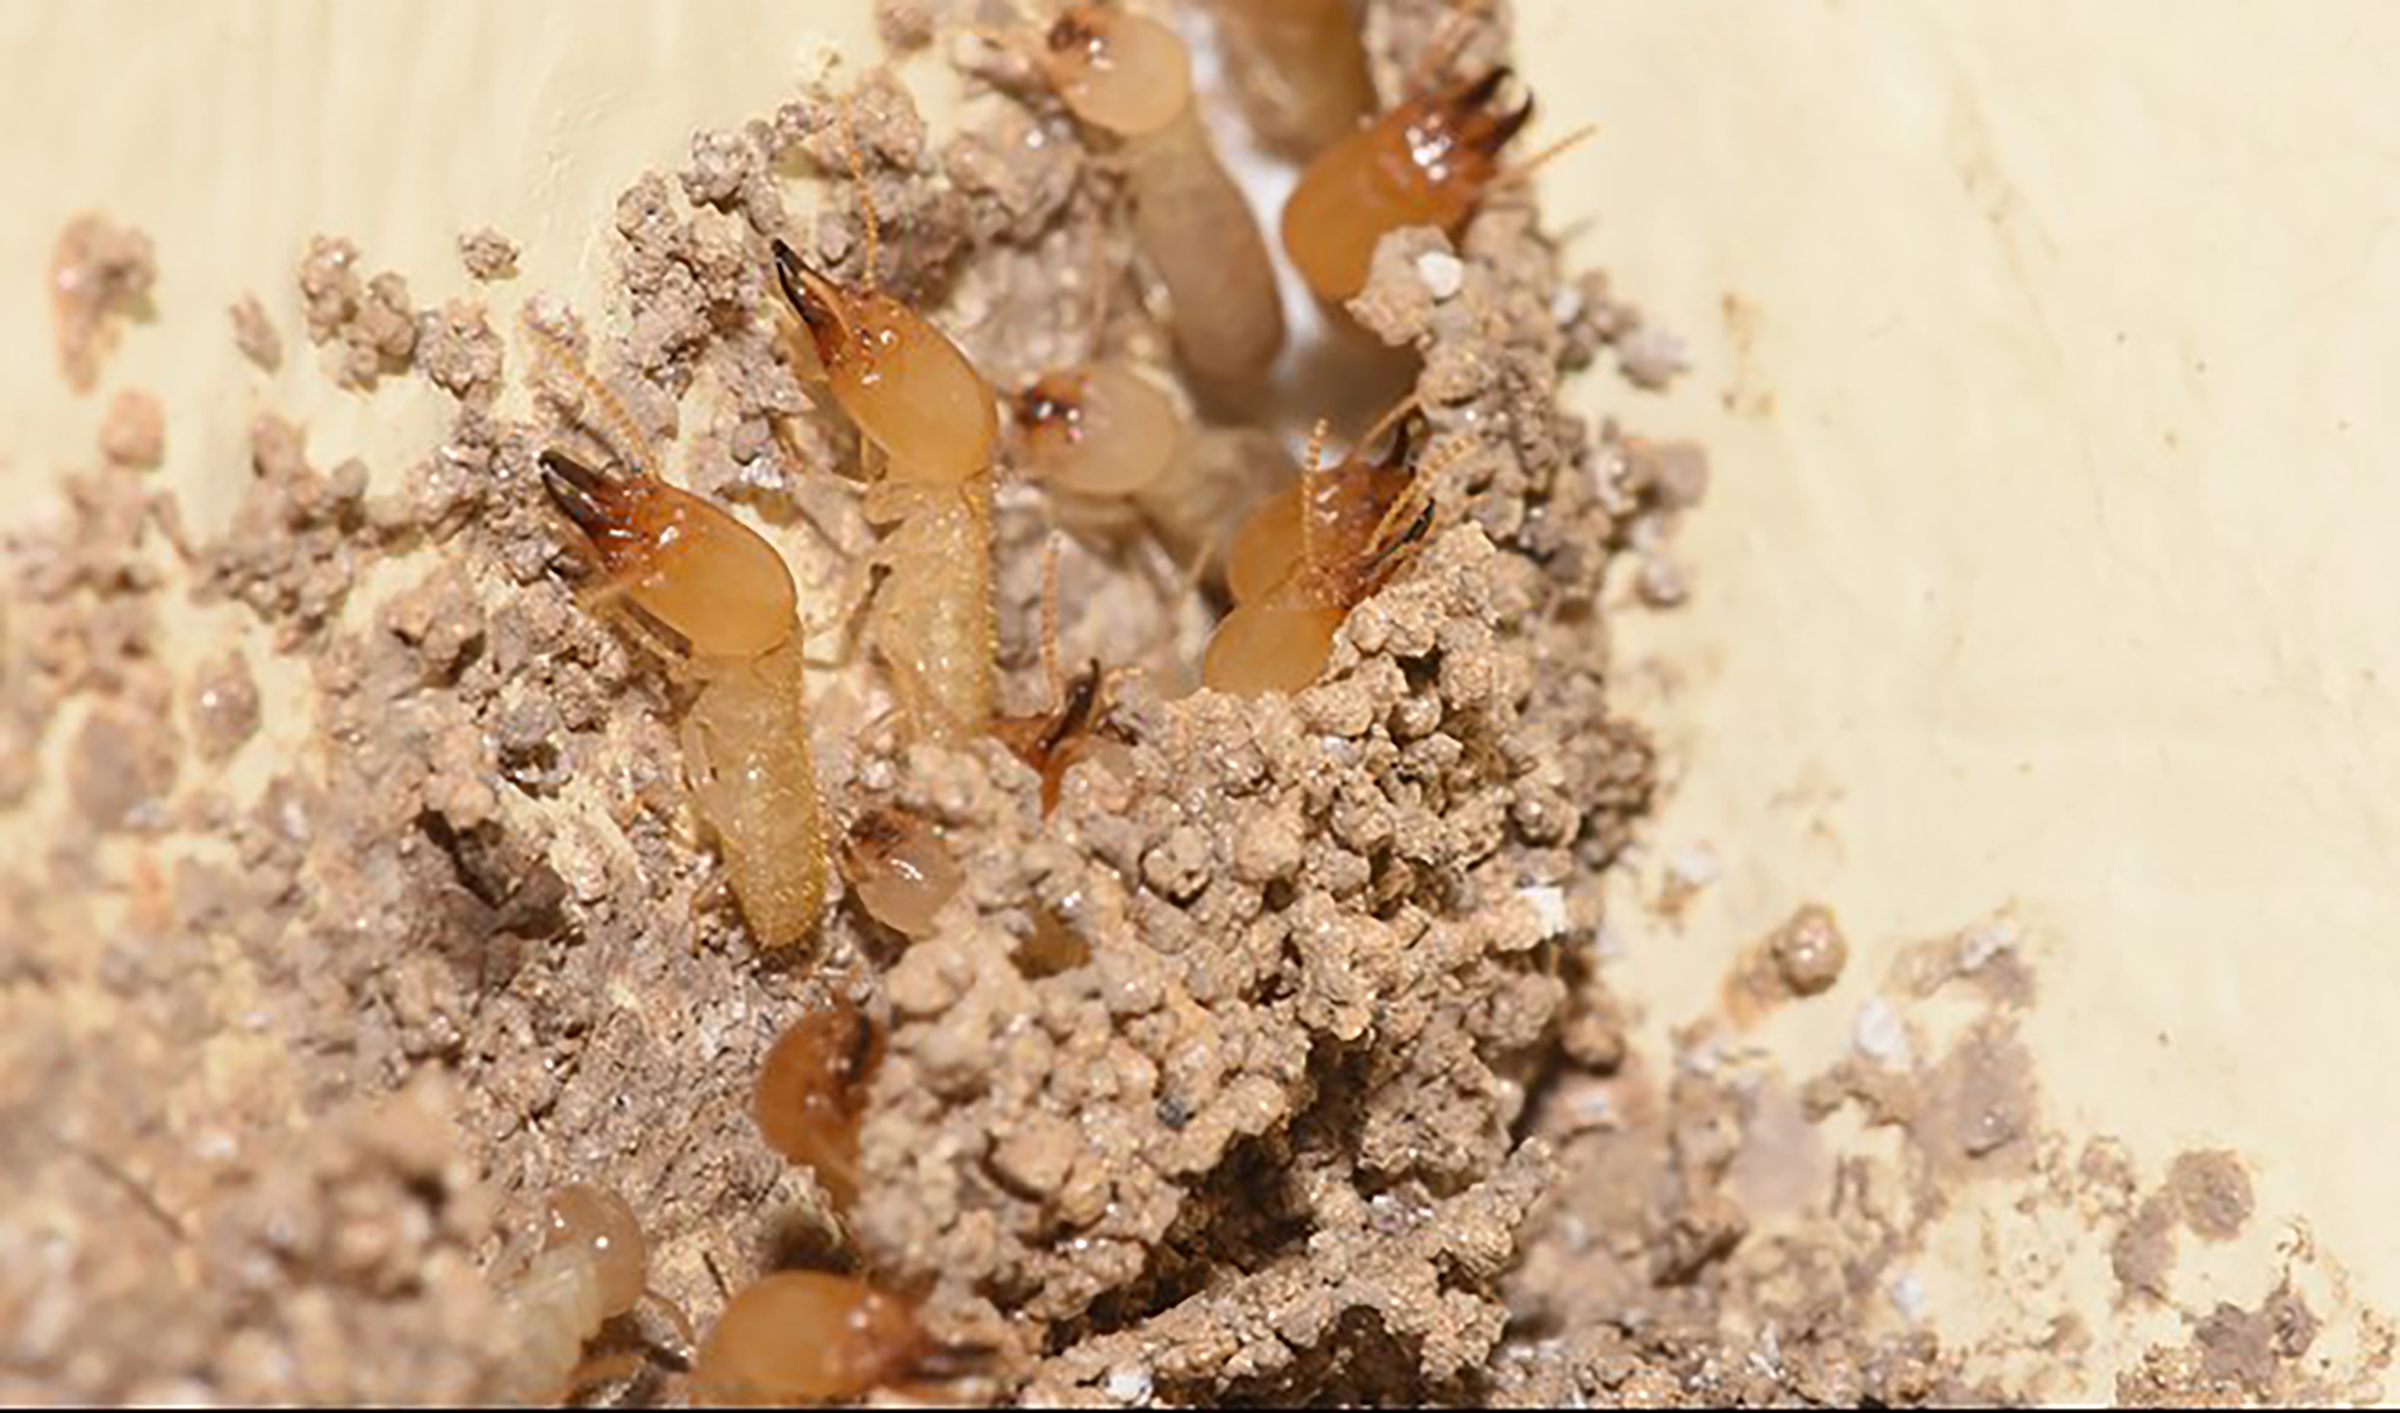 Top 10 Termite Prevention Tips